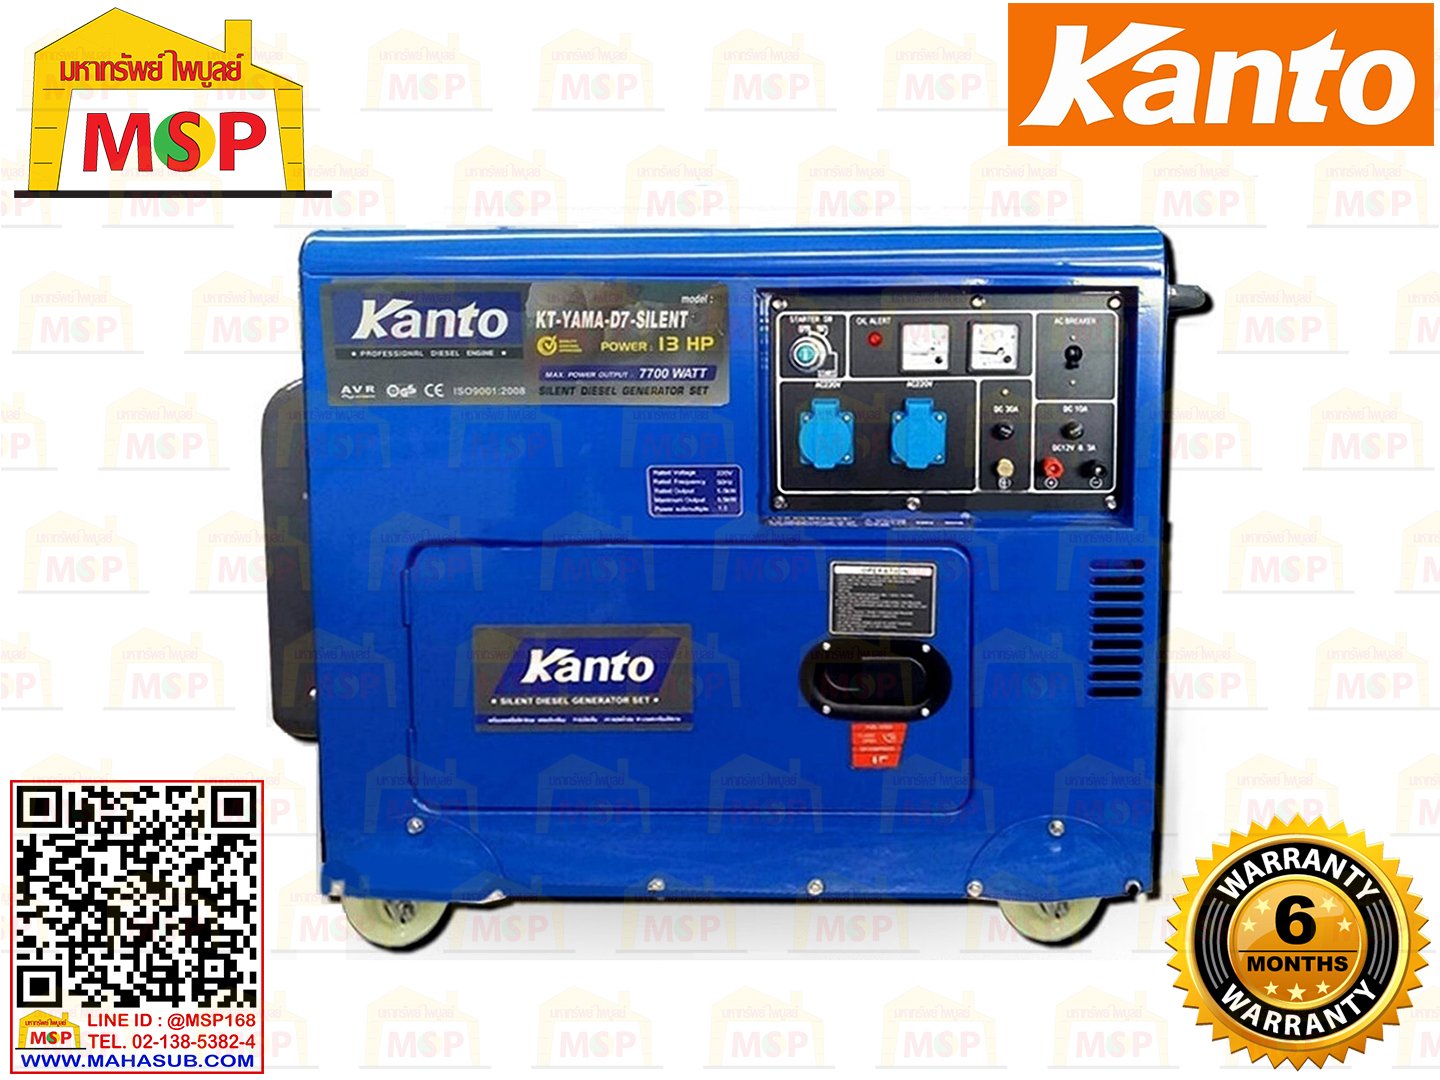 Kanto เครื่องปั่นไฟใช้ดีเซล KT-YAMA-D7-SILENT 7.7 KW 220V กุญแจ #NV